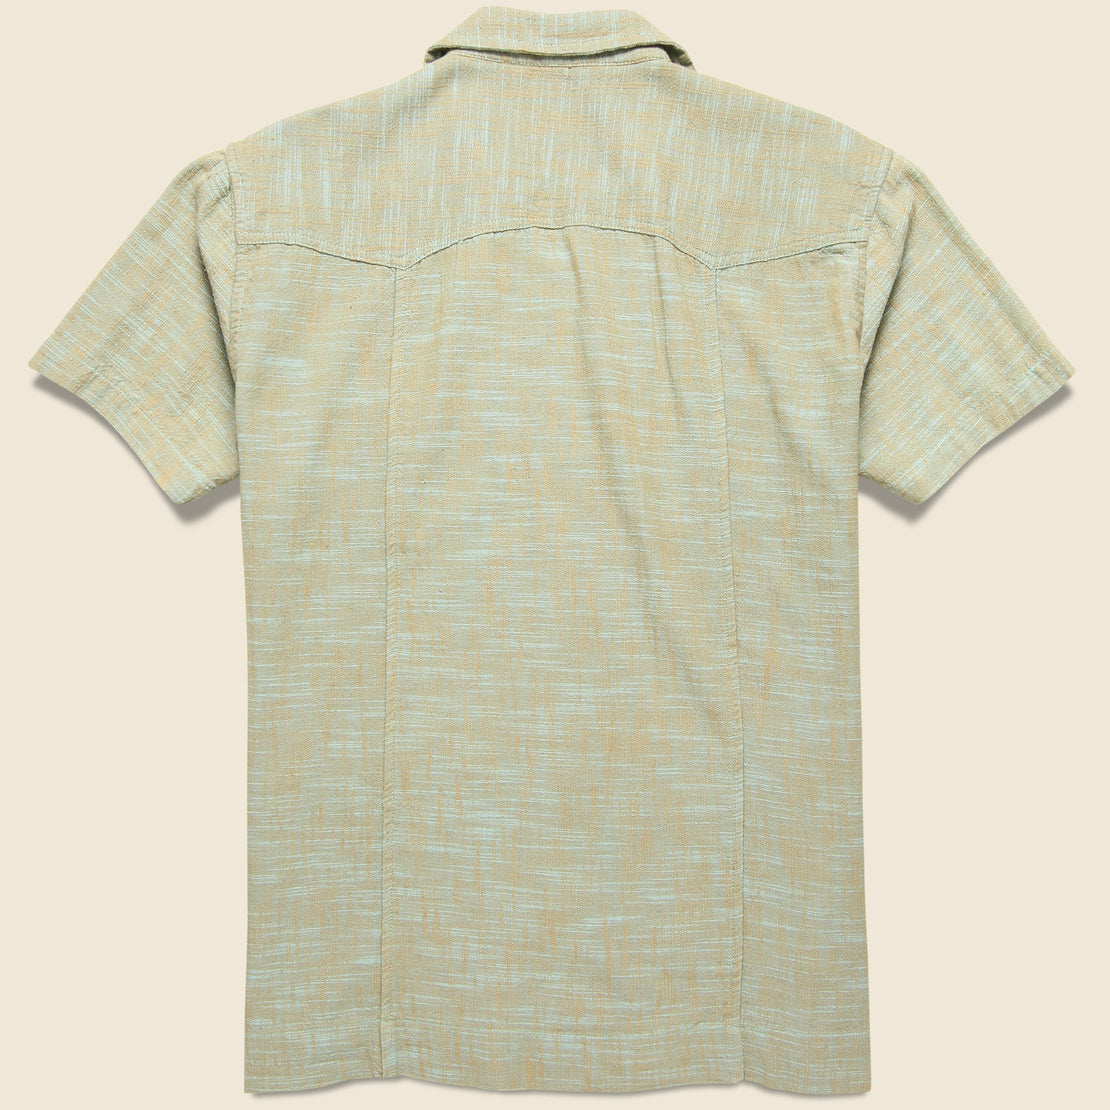 Slub Delave Summer Shirt - Seafoam - Corridor - STAG Provisions - Tops - S/S Woven - Solid